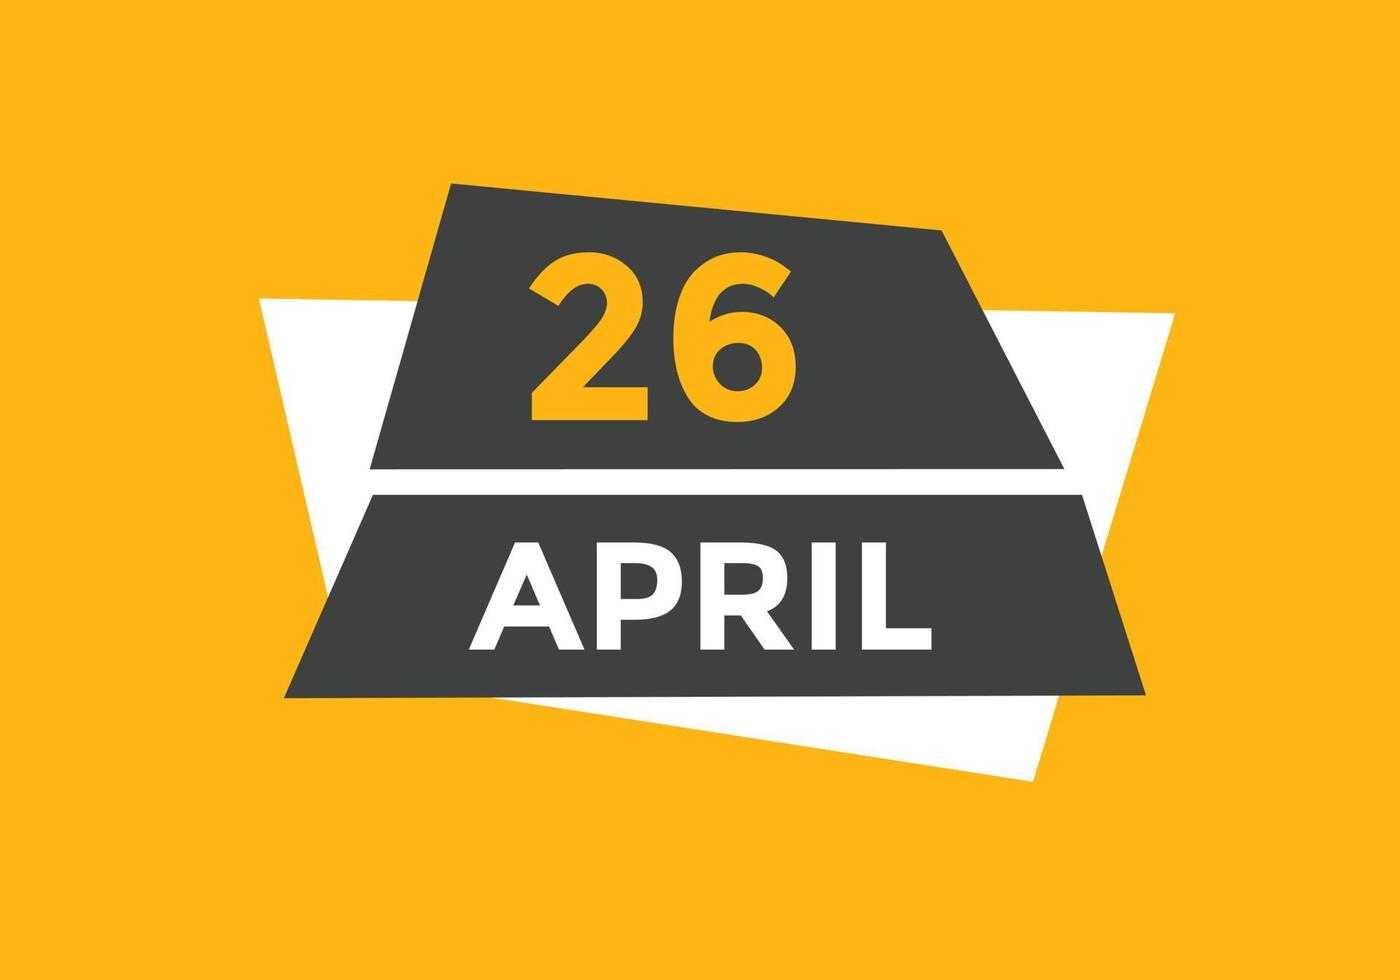 april 26 calendar reminder. 26th april daily calendar icon template. Calendar 26th april icon Design template. Vector illustration